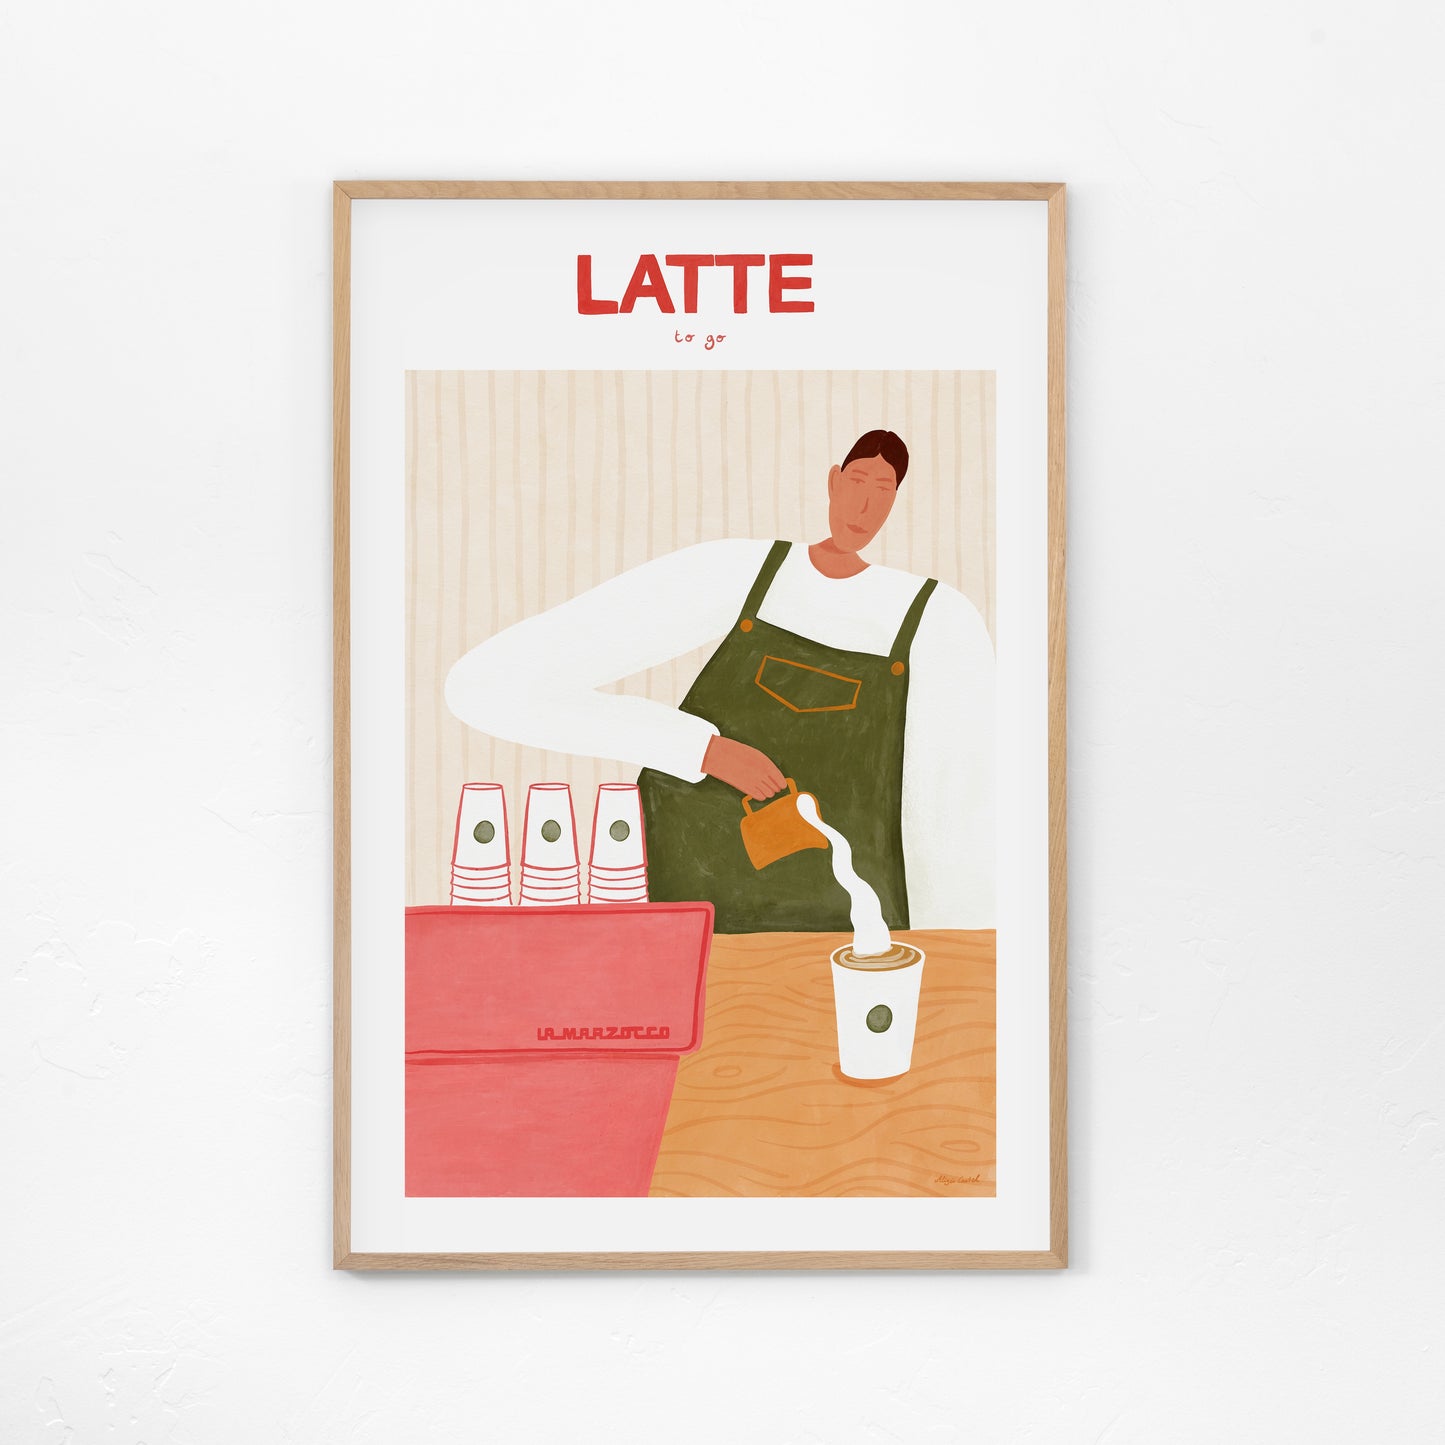 Latte (To Go)